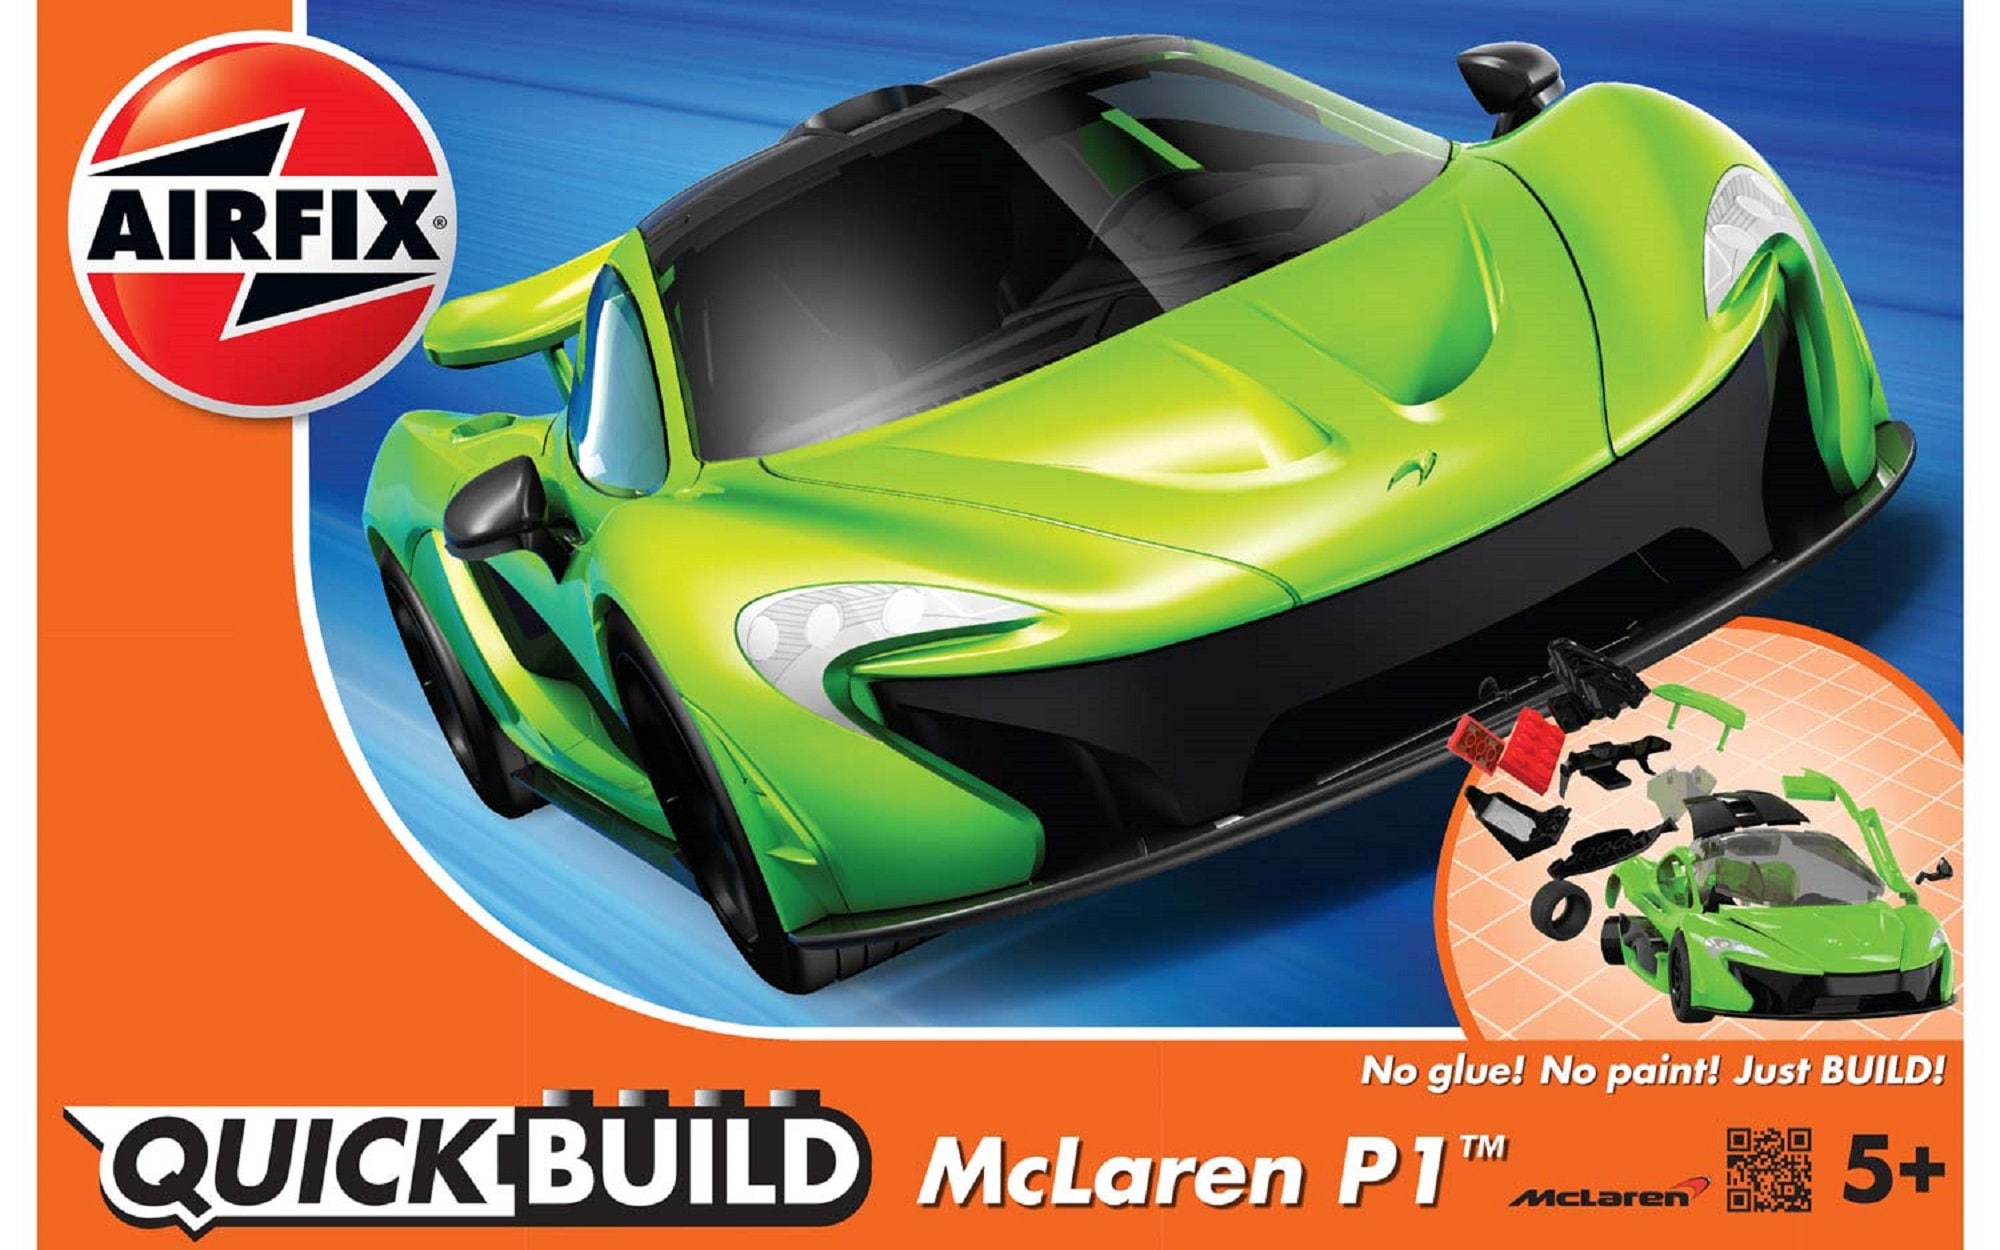 Mclaren P1 Plastic Model Car Kit AIRFIX QUICK BUILD Lego-like Kids